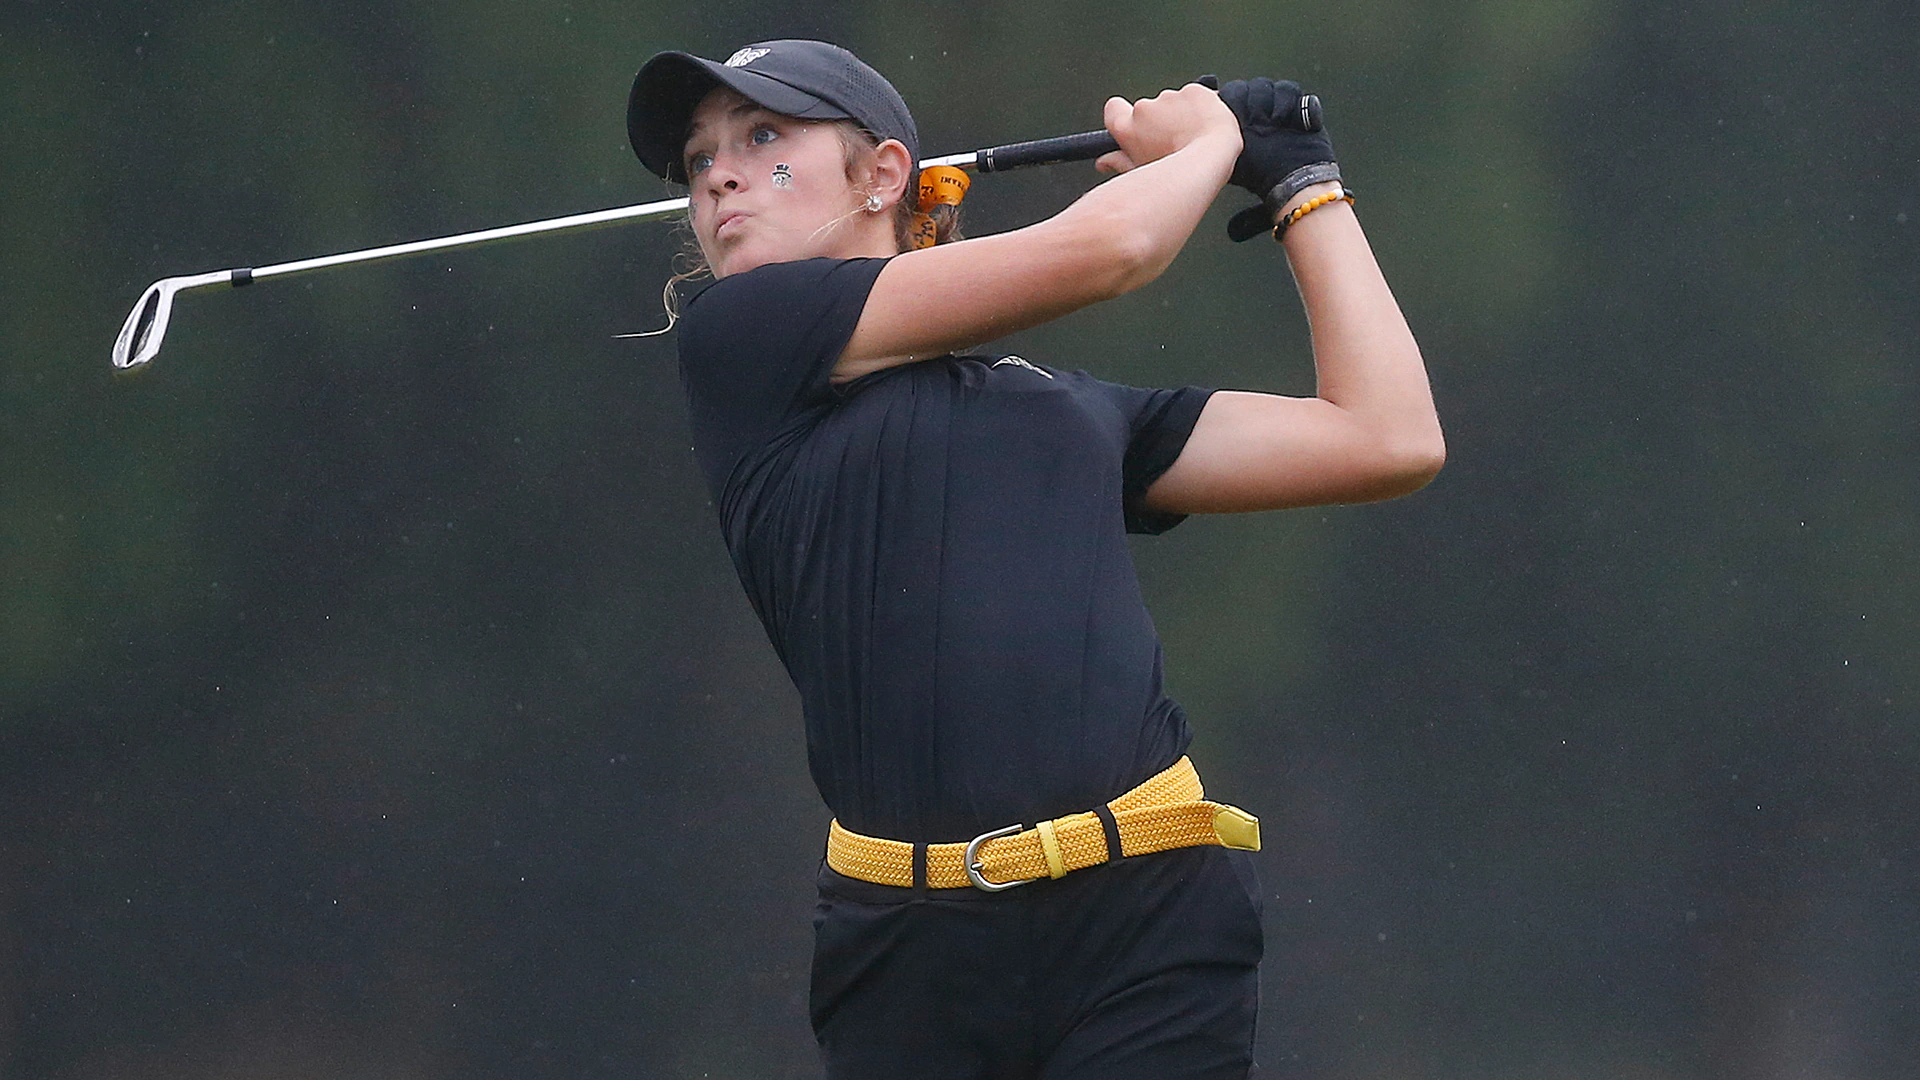 Wake Forest’s Rachel Kuehn earns LPGA Tour exemption with victory